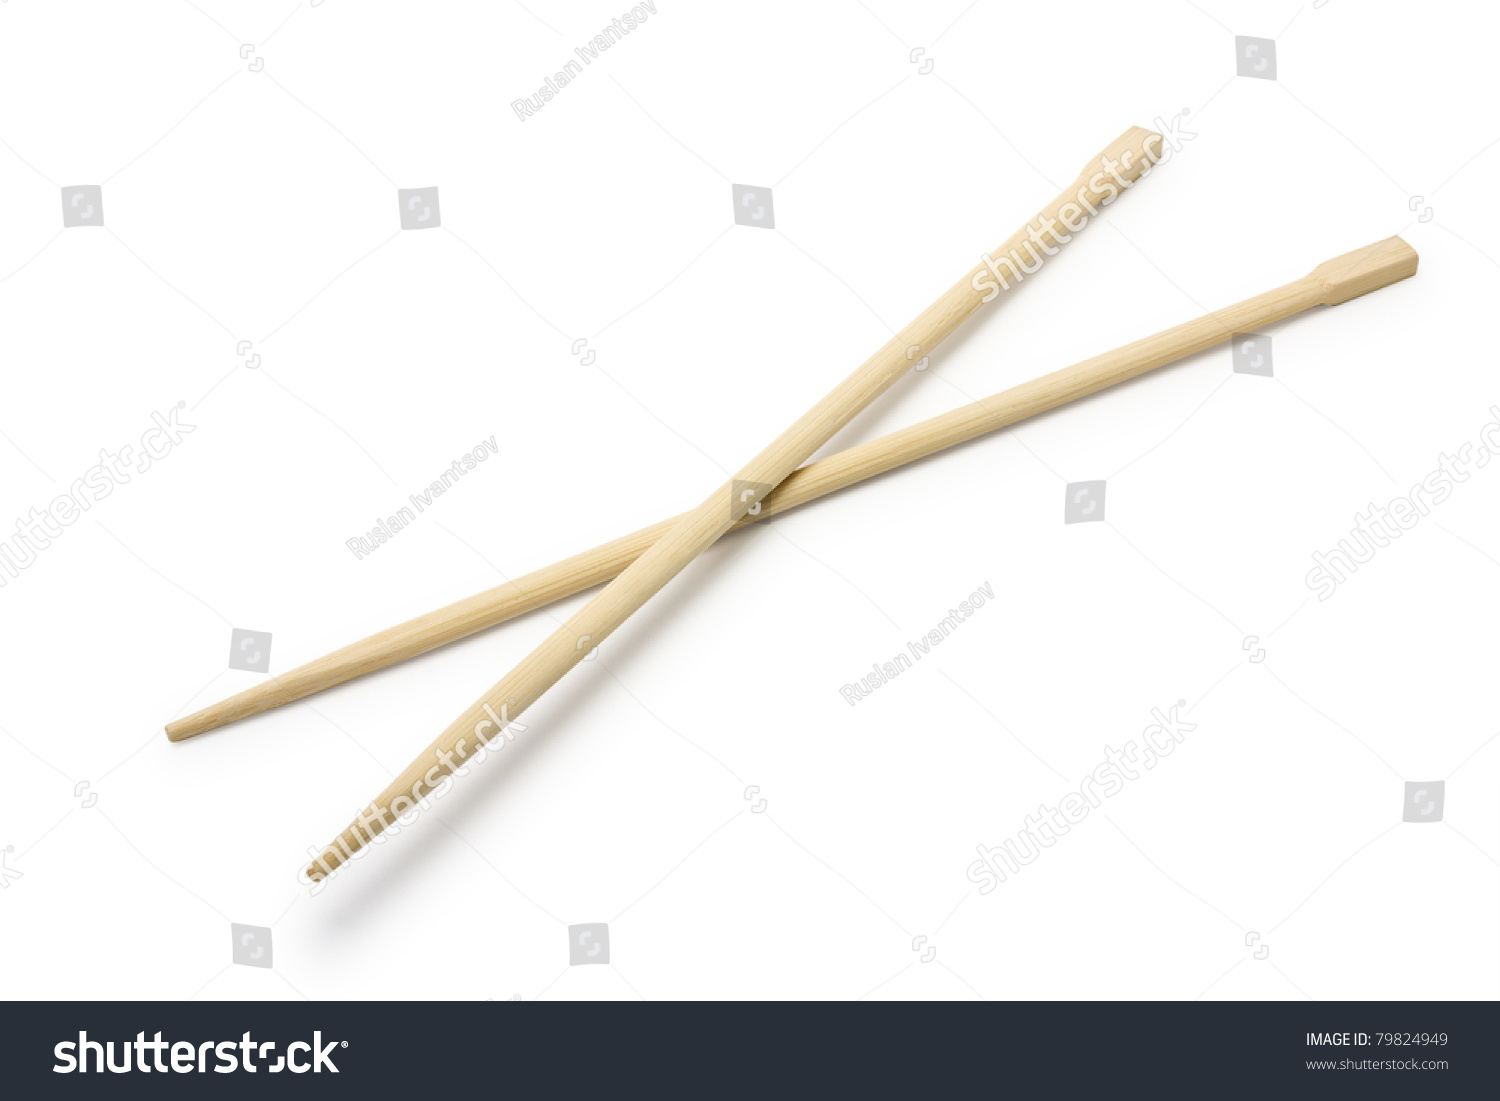 Chopsticks In White Background Stock Photo 79824949 : Shutterstock